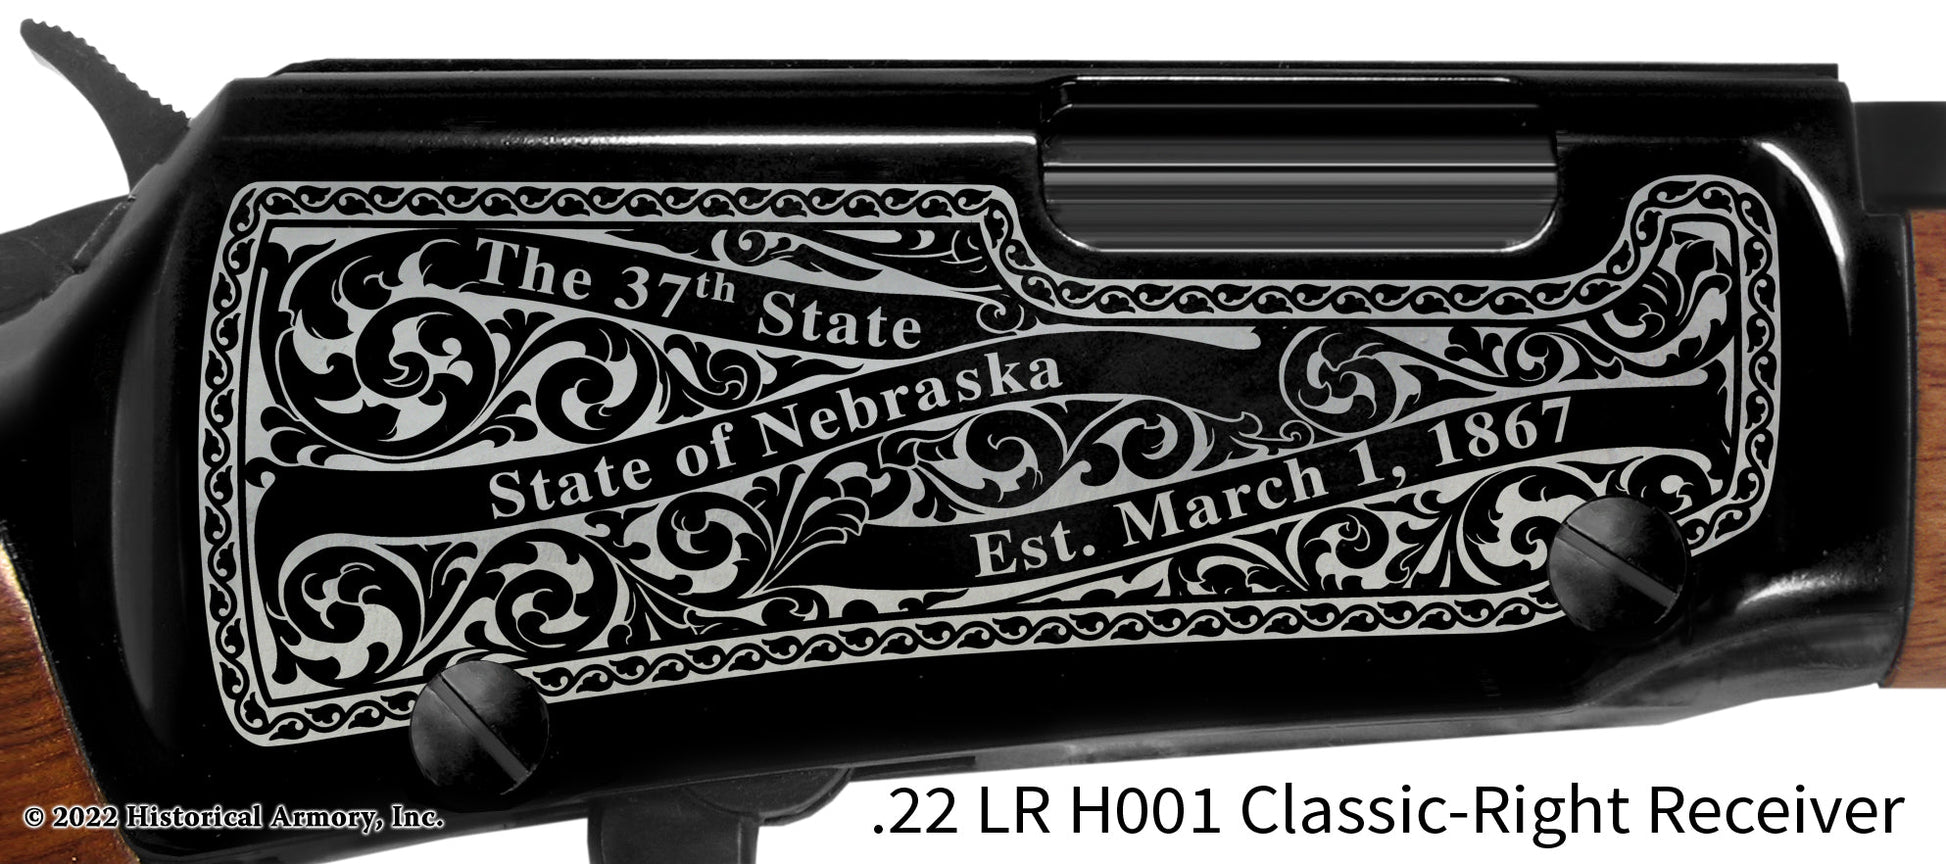 Saunders County Nebraska Engraved Henry H001 Rifle